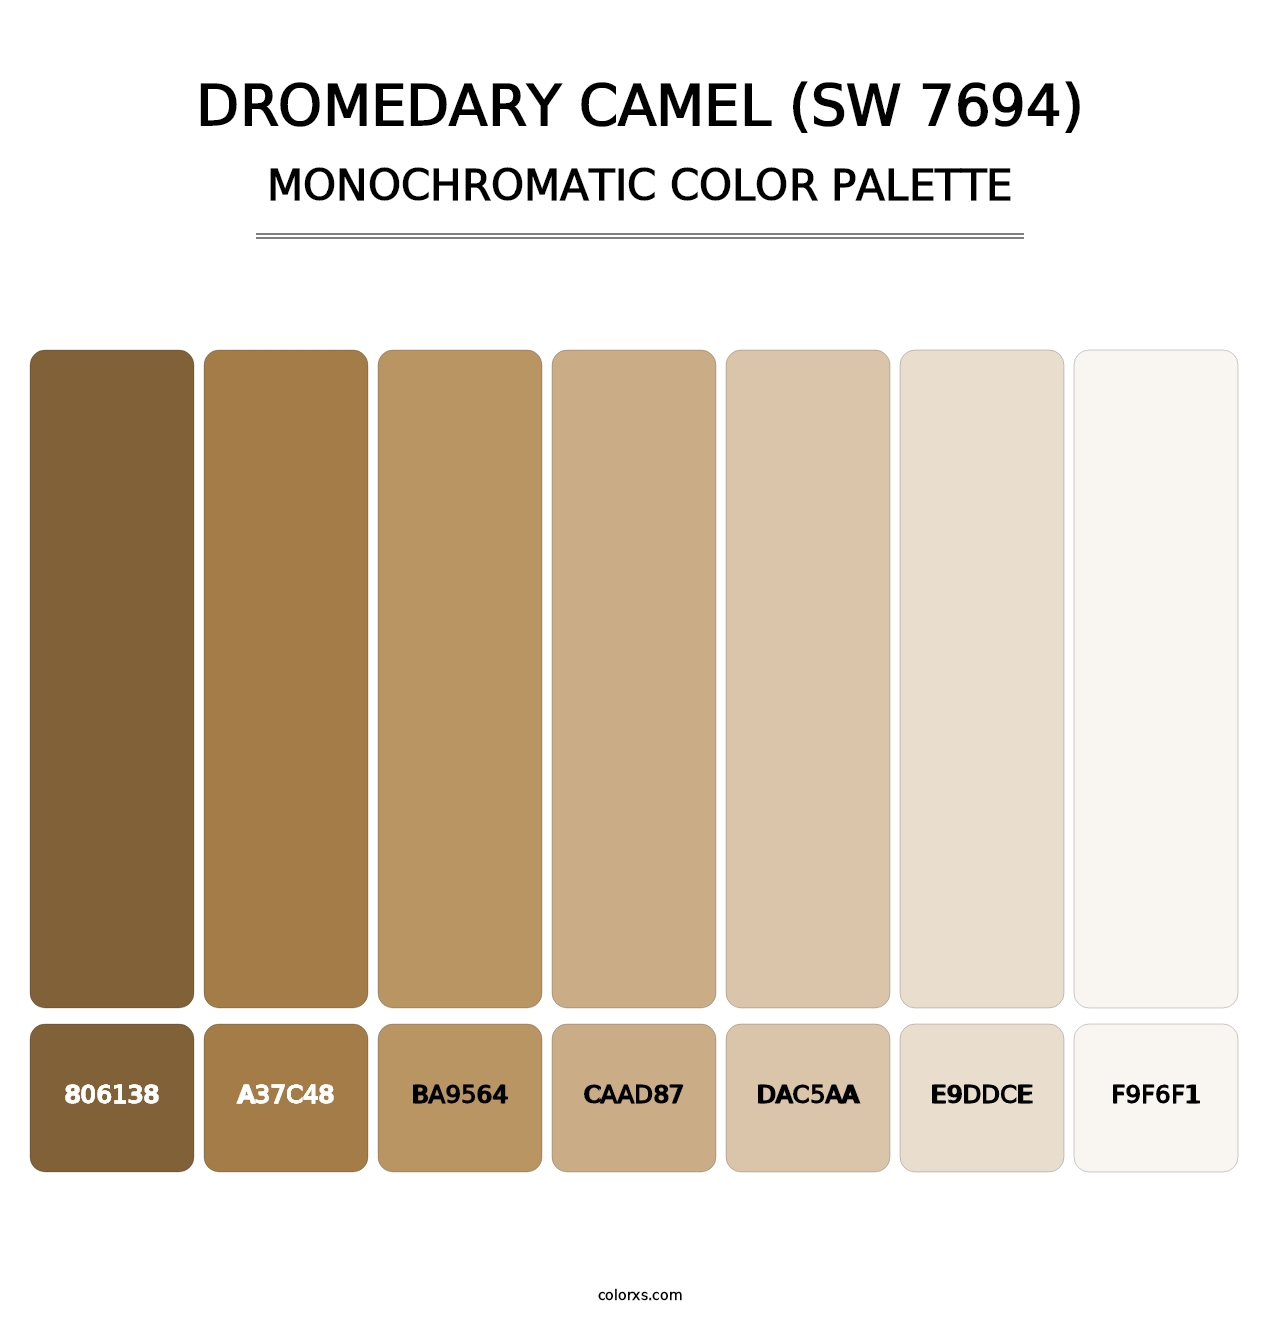 Dromedary Camel (SW 7694) - Monochromatic Color Palette